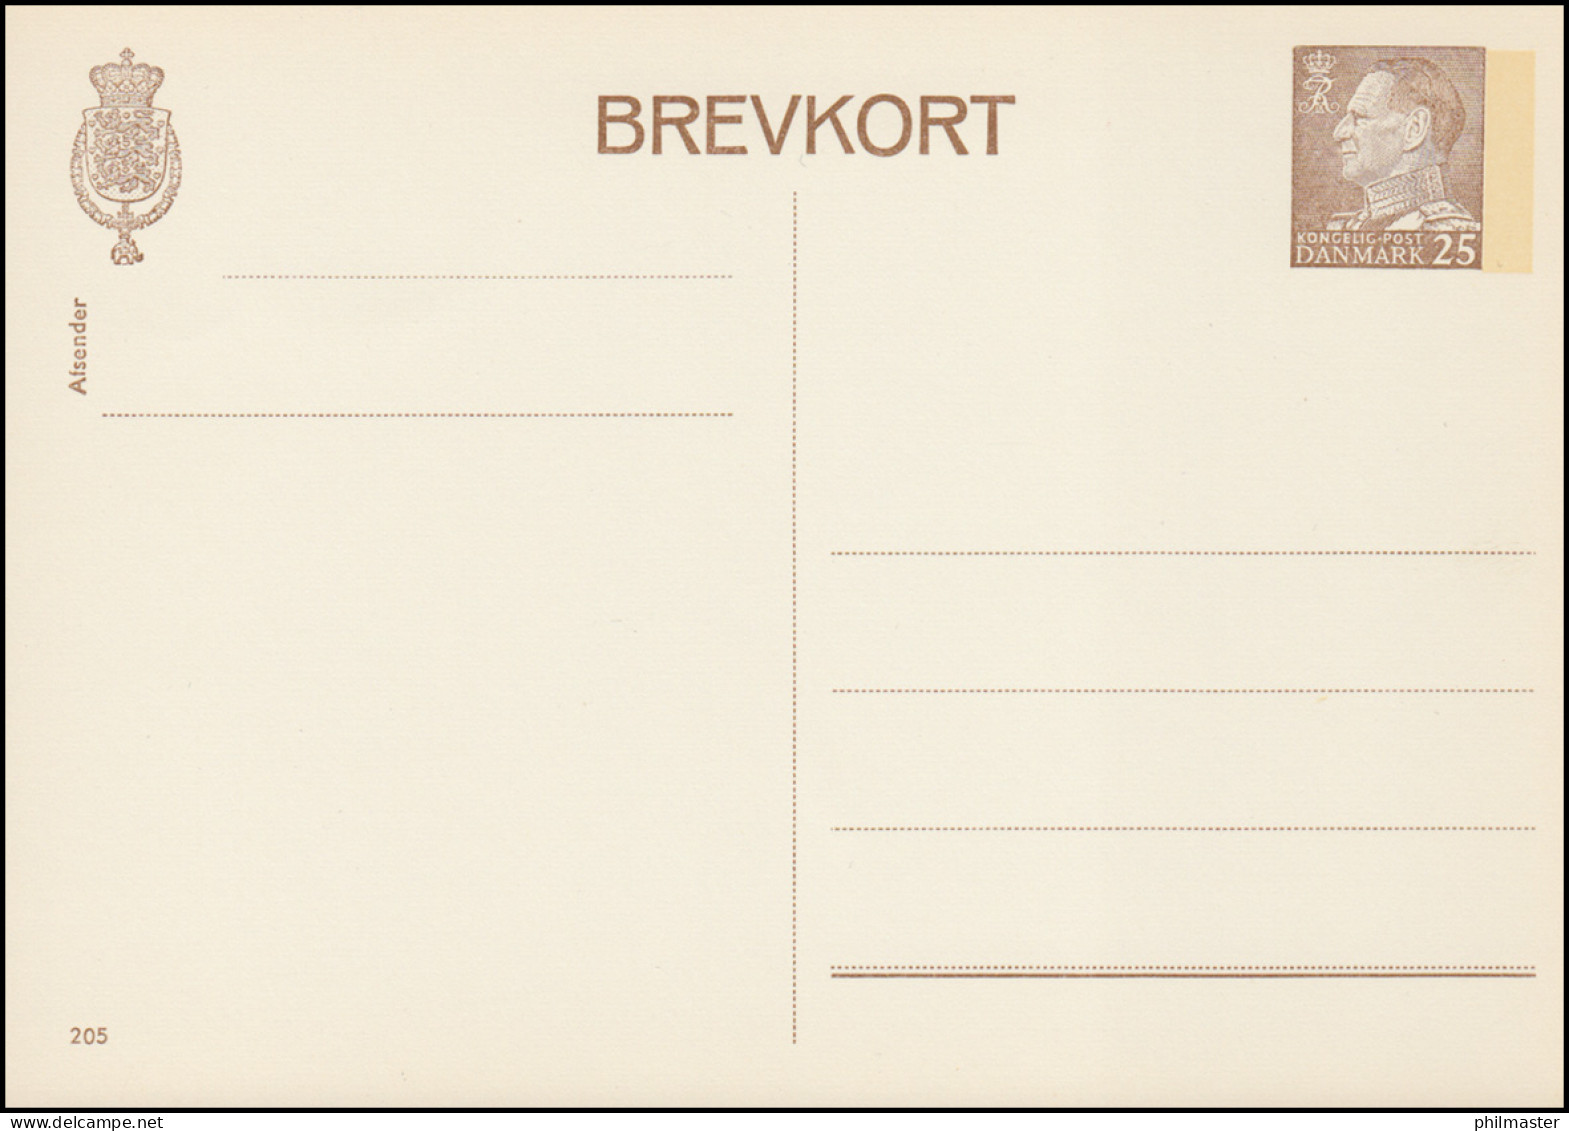 Dänemark Postkarte P 256 Frederik IX. 25 Öre, Kz. 205, ** - Postwaardestukken